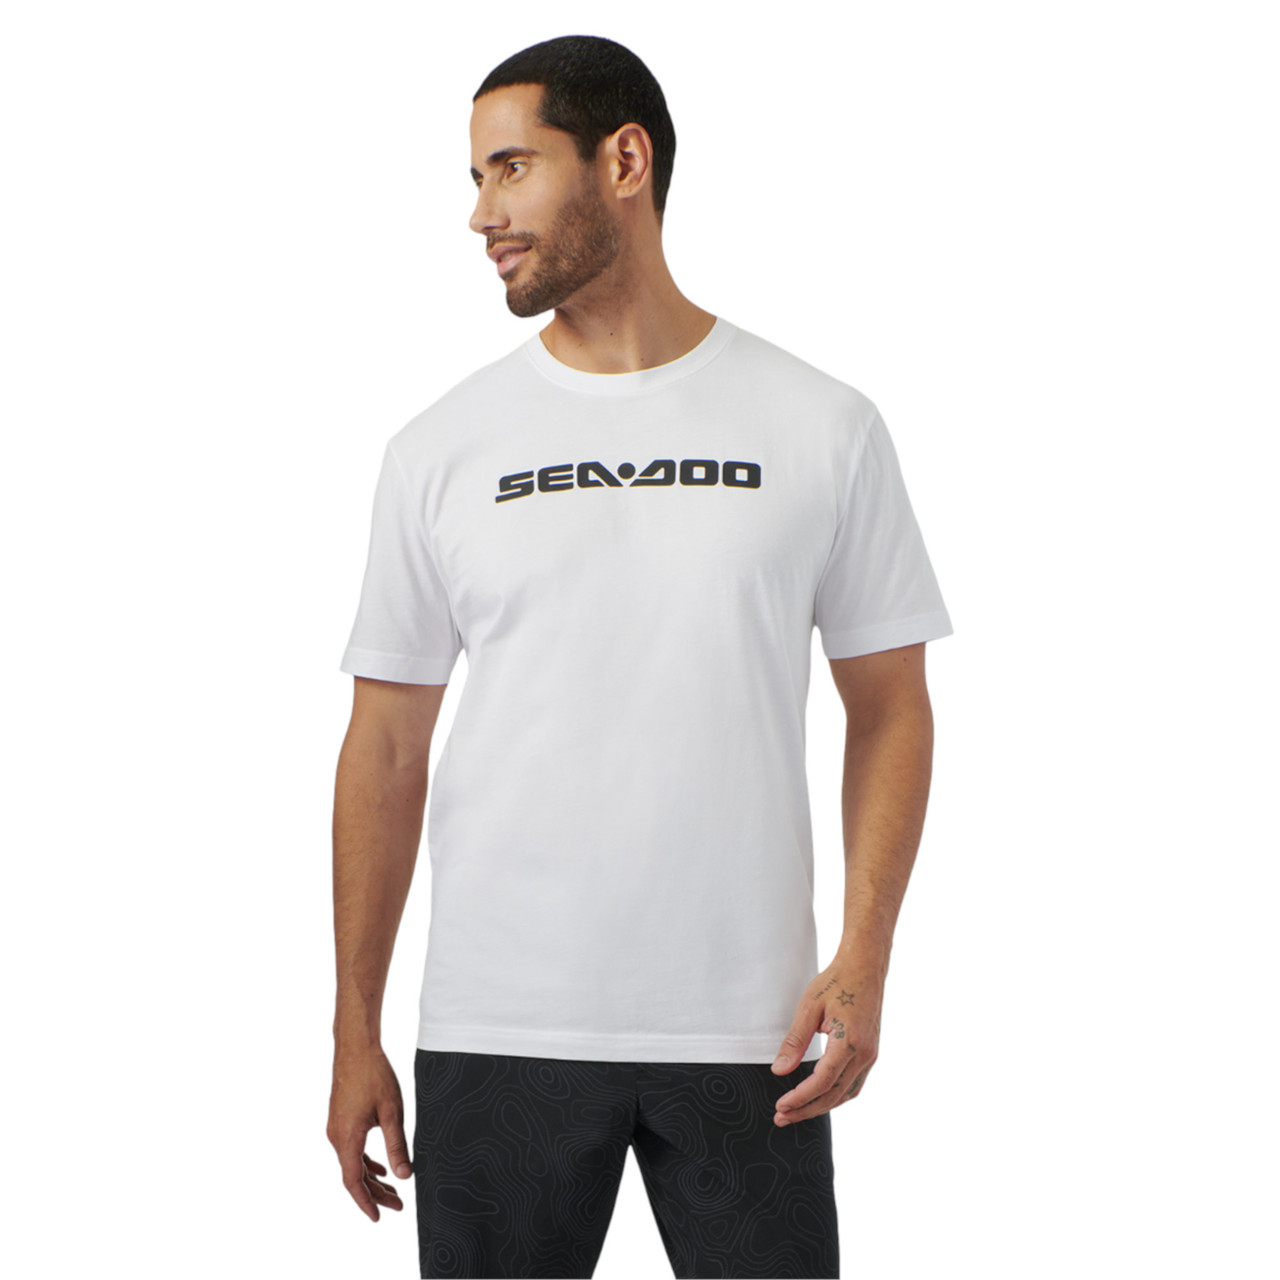 Sea-Doo New OEM, Men's Large Branded Cotton Signature T-Shirt, 4546630901